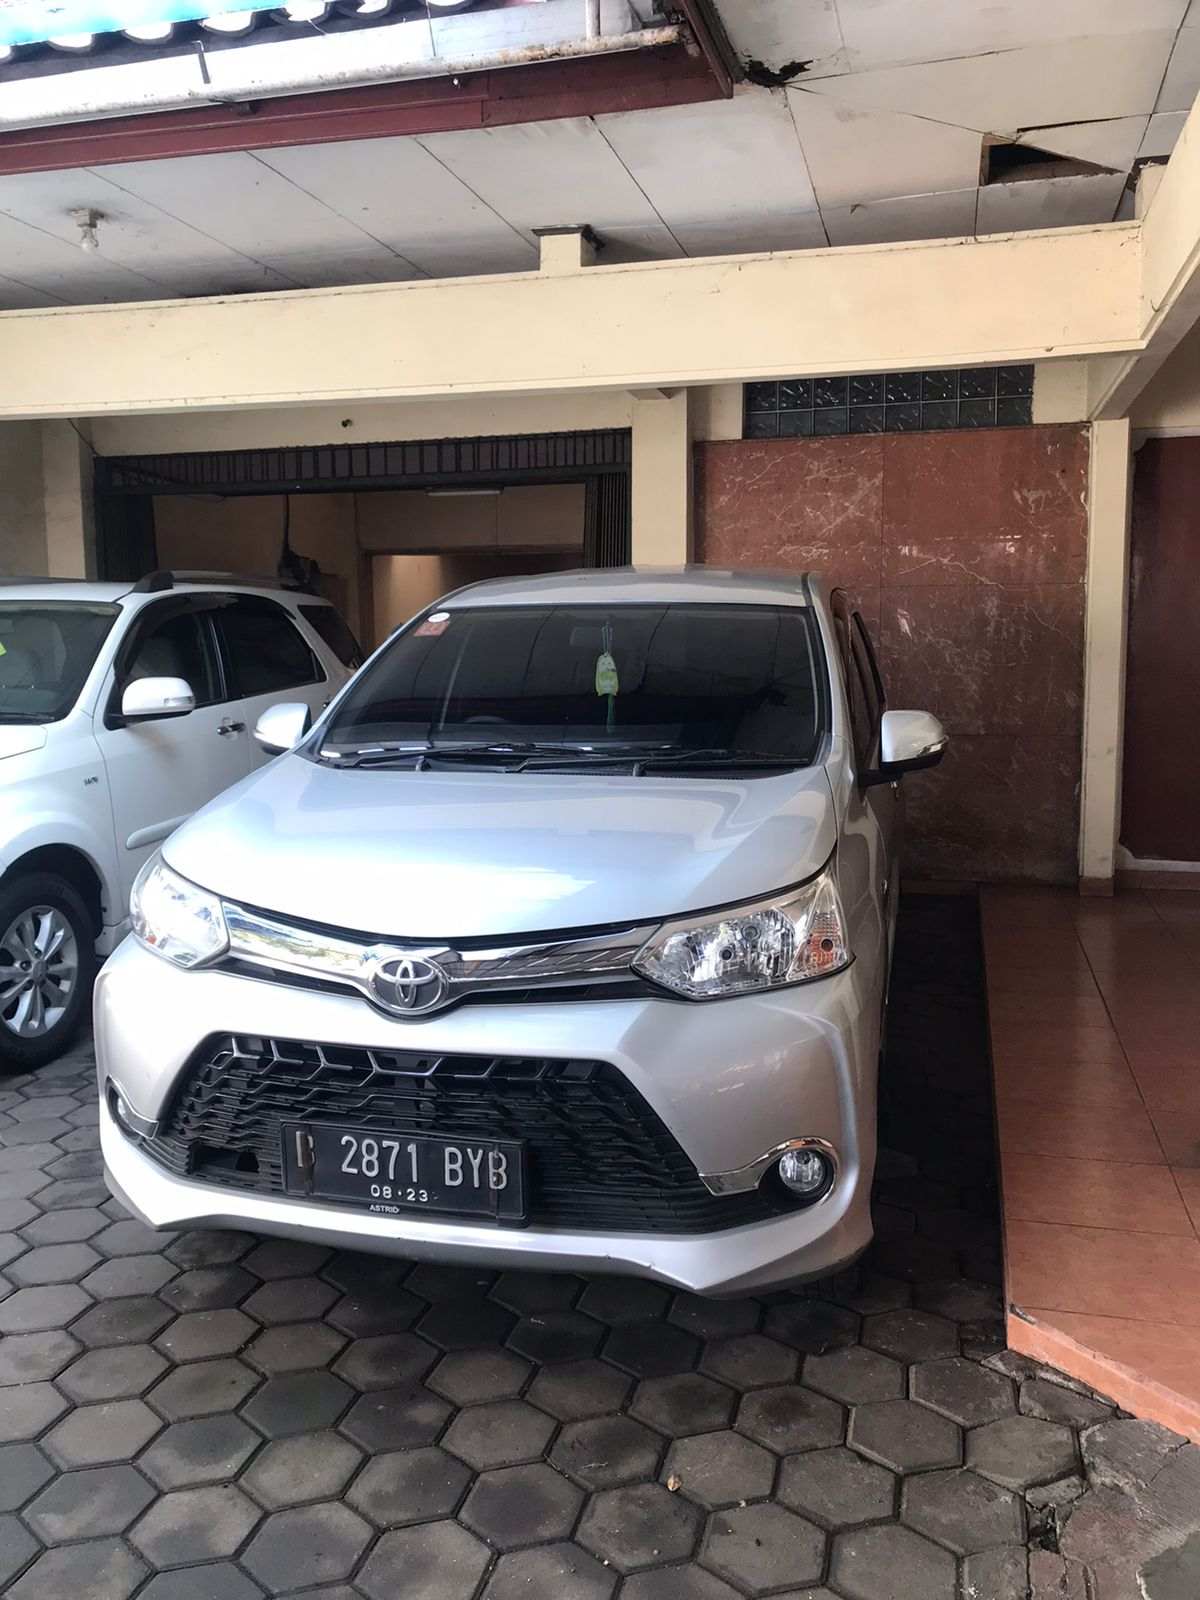 Harga Sewa Mobil Avanza Di Bandung